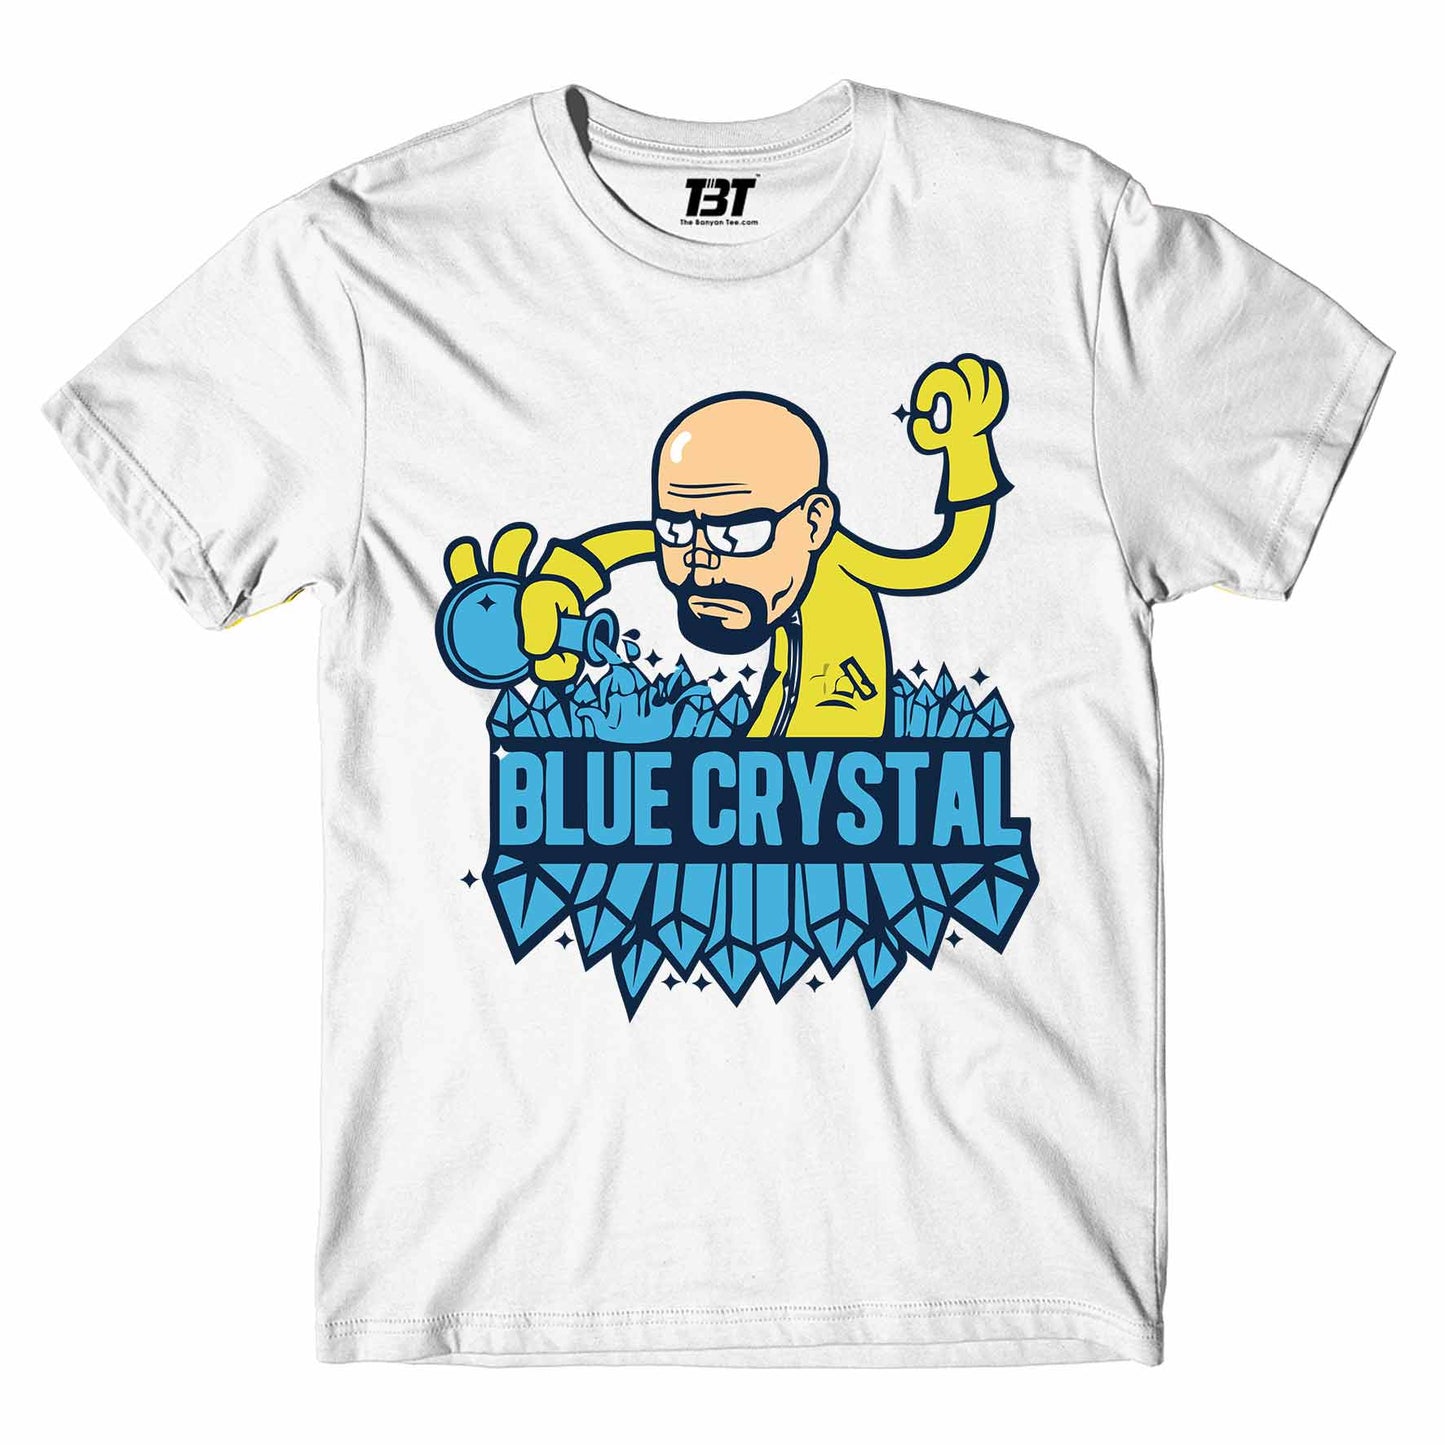 Breaking Bad T-shirt Merchandise Apparel Clothing